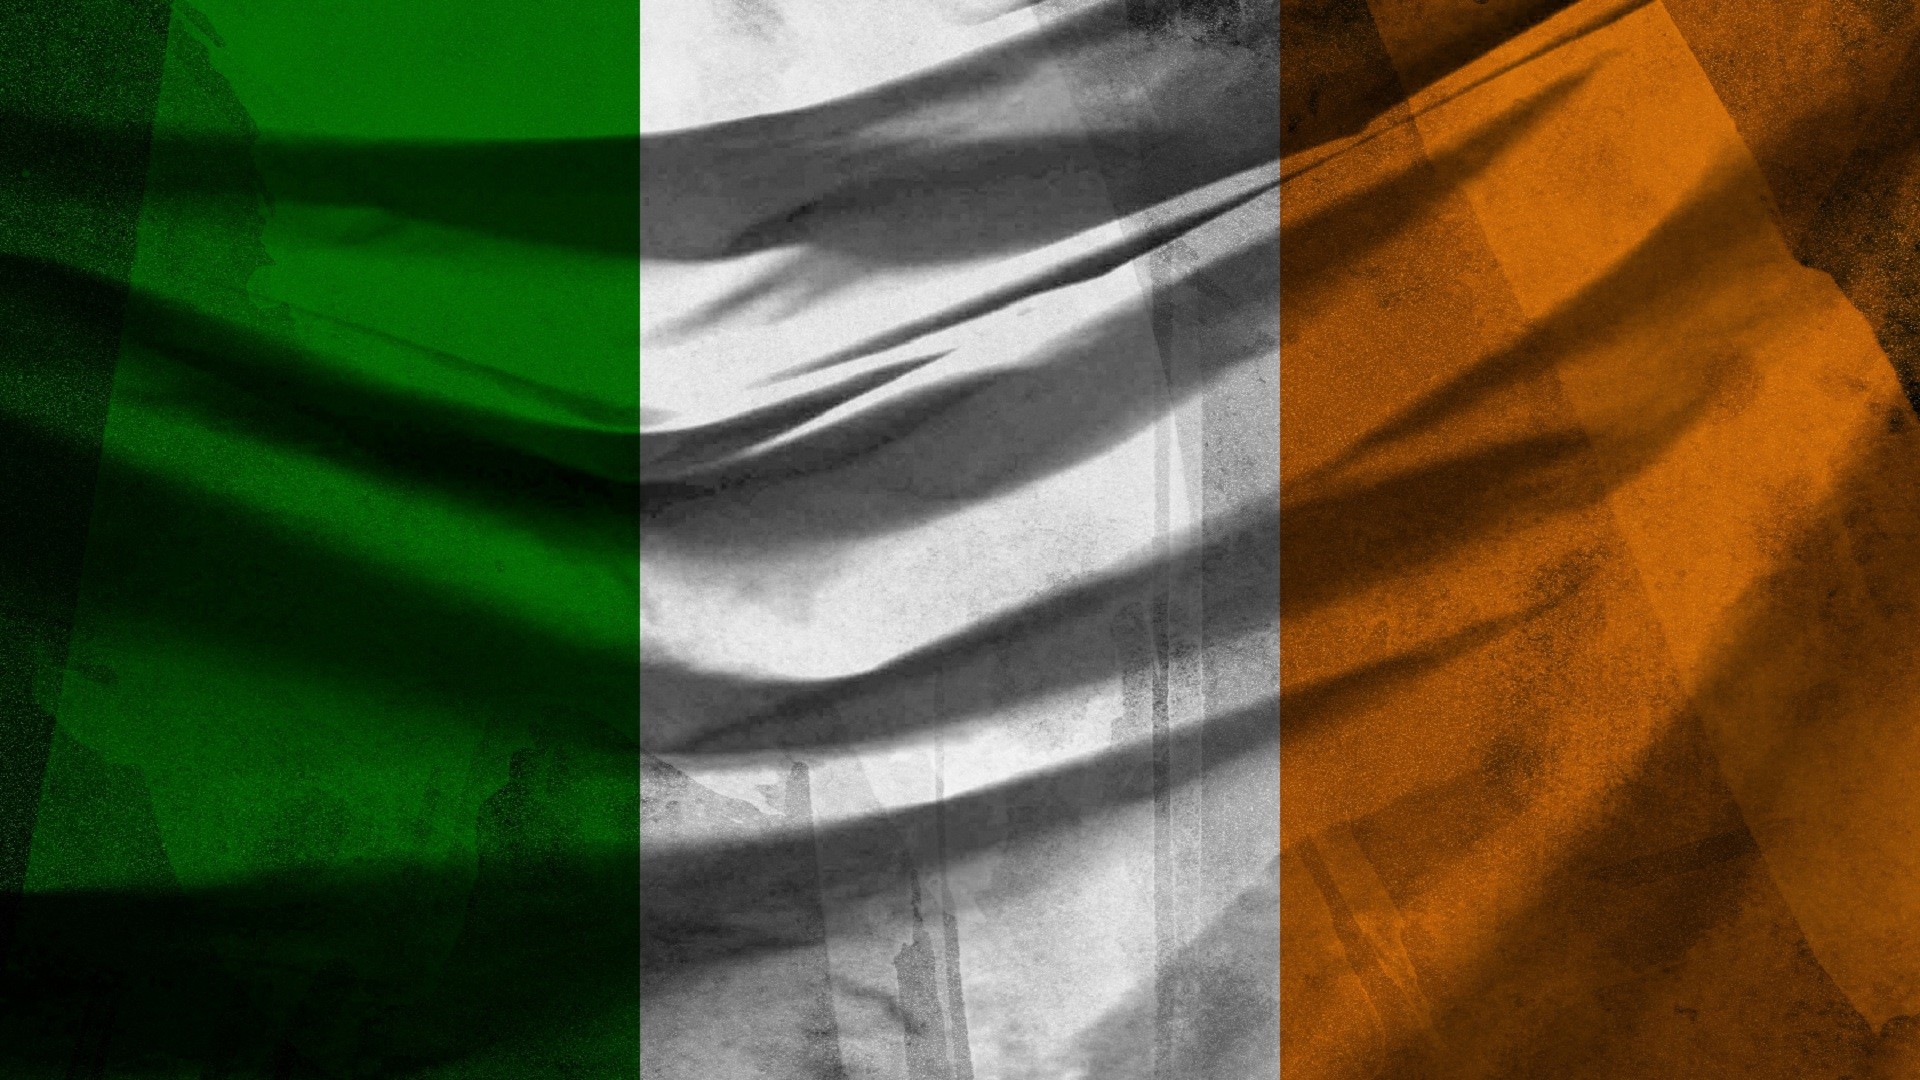 1920x1080 Irish Flag Wallpaper Iphone E e cf c fdf e dc fe